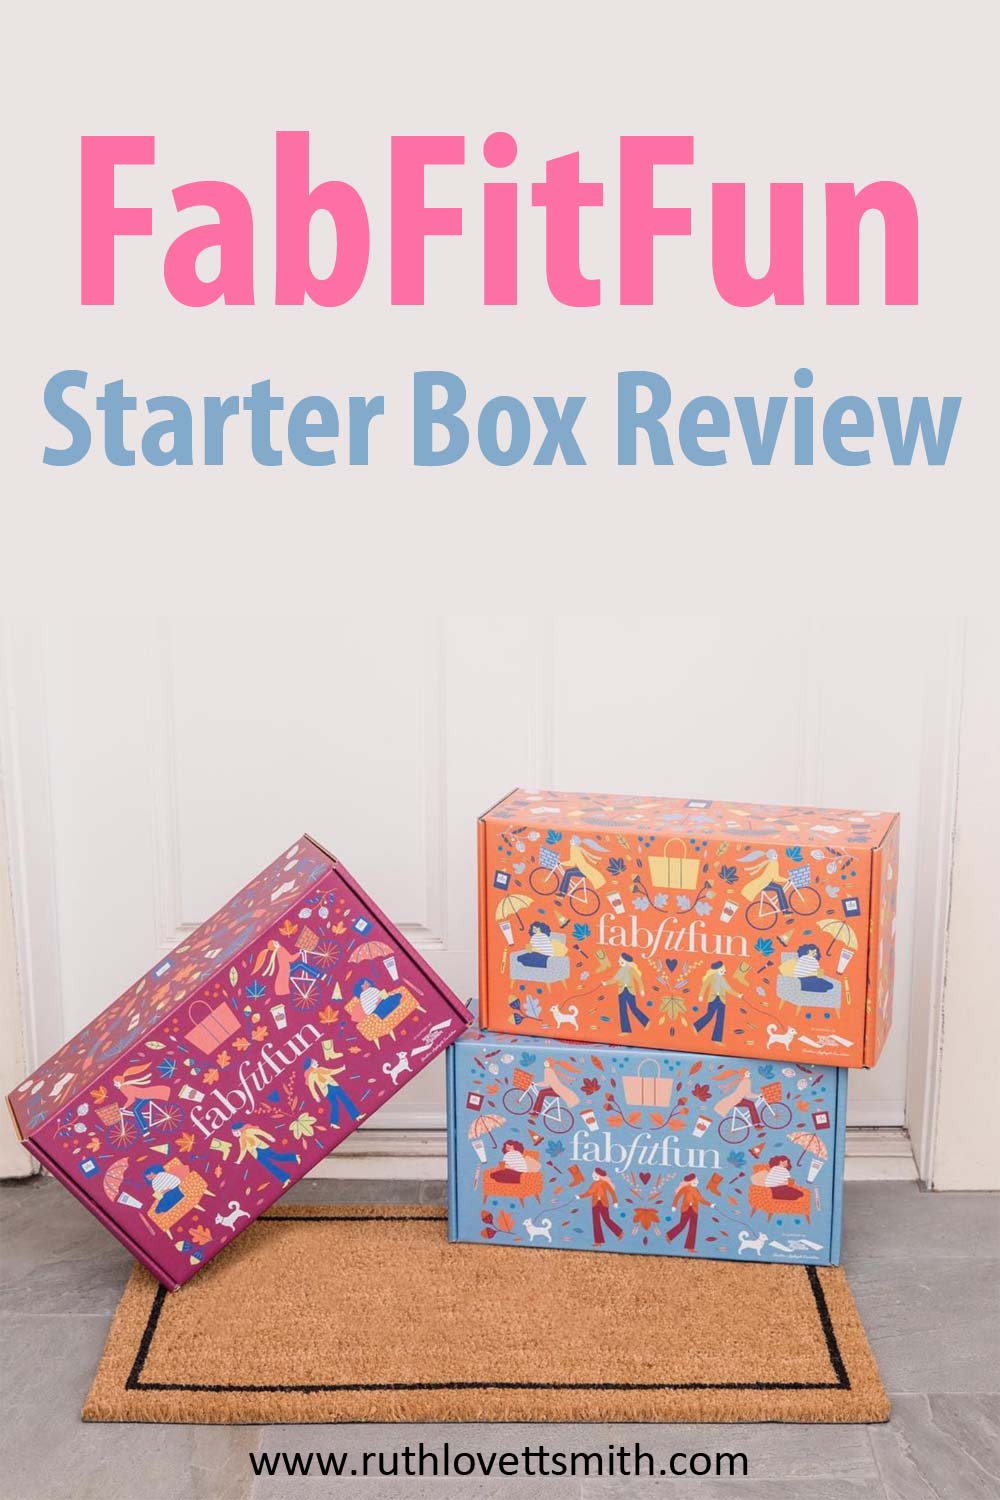 FabFitFun Starter Box Reviews